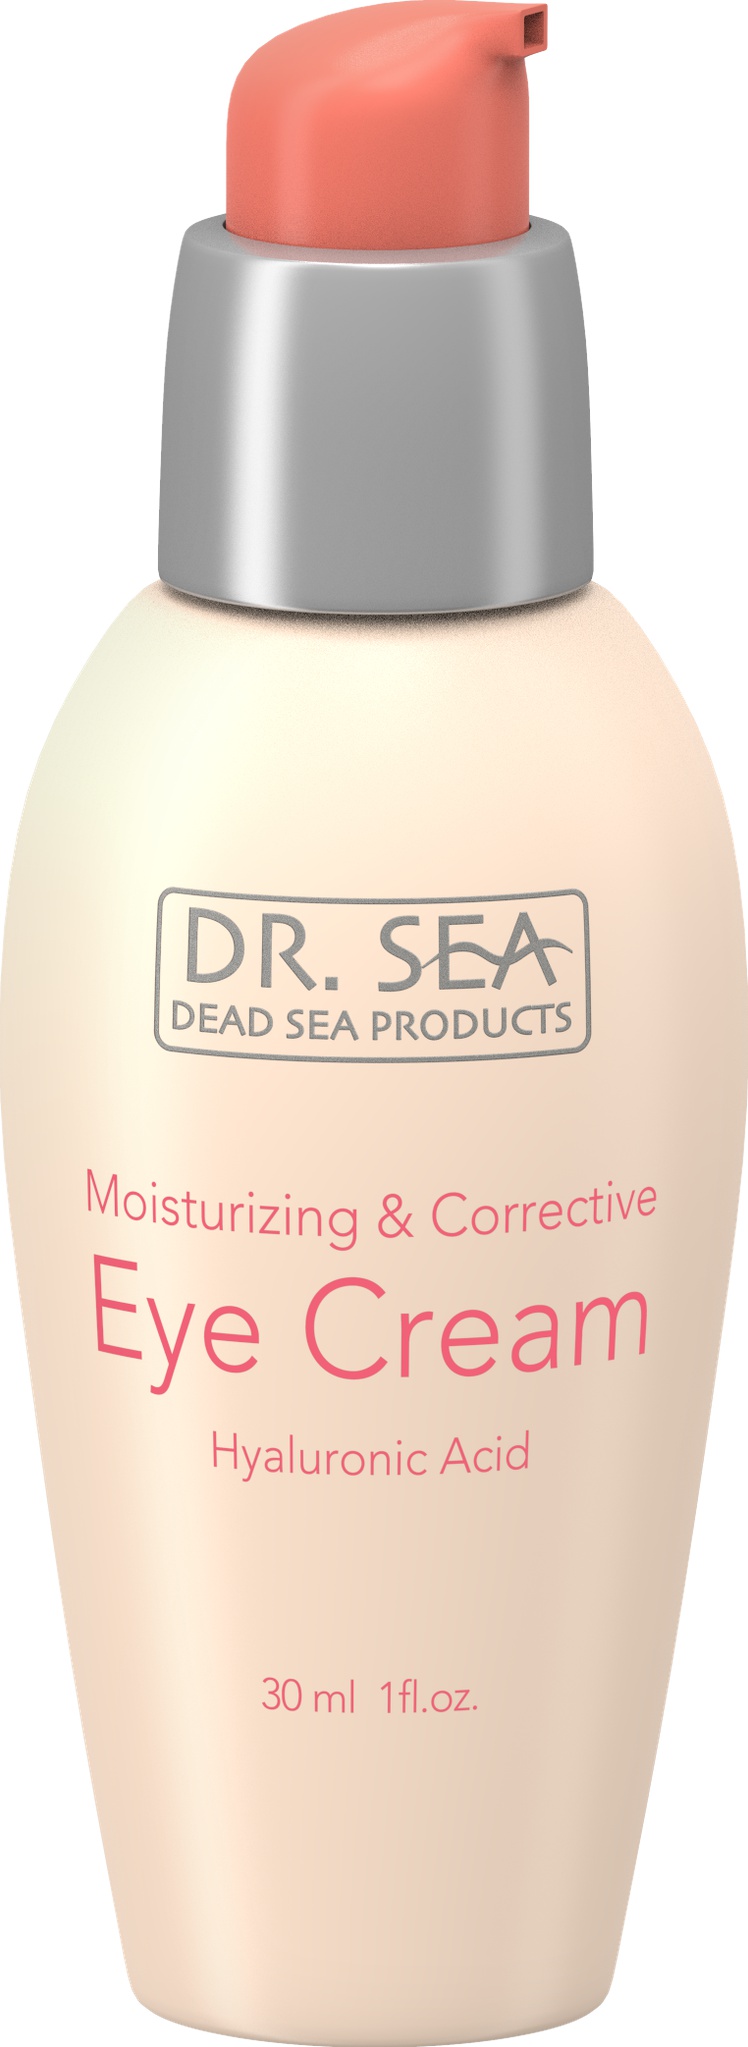 DR. SEA Eye Cream  Moisturizing Corrective Hyaluronic Acid